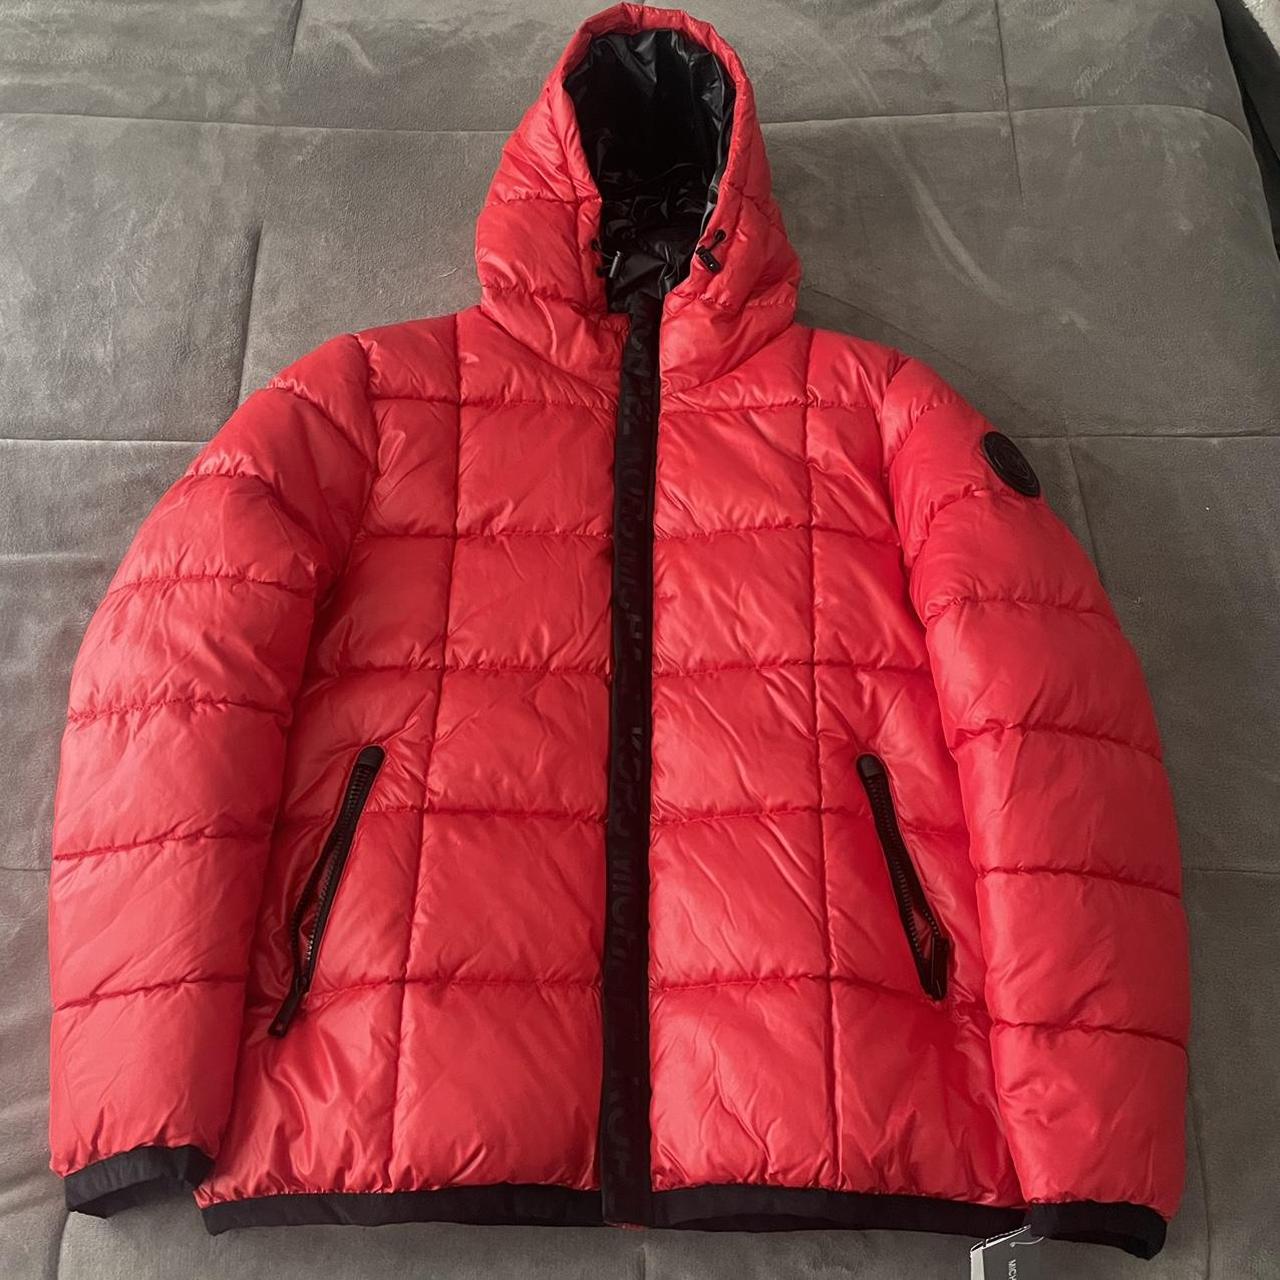 Red Michael Kors Puffer Jacket This jacket is in... - Depop